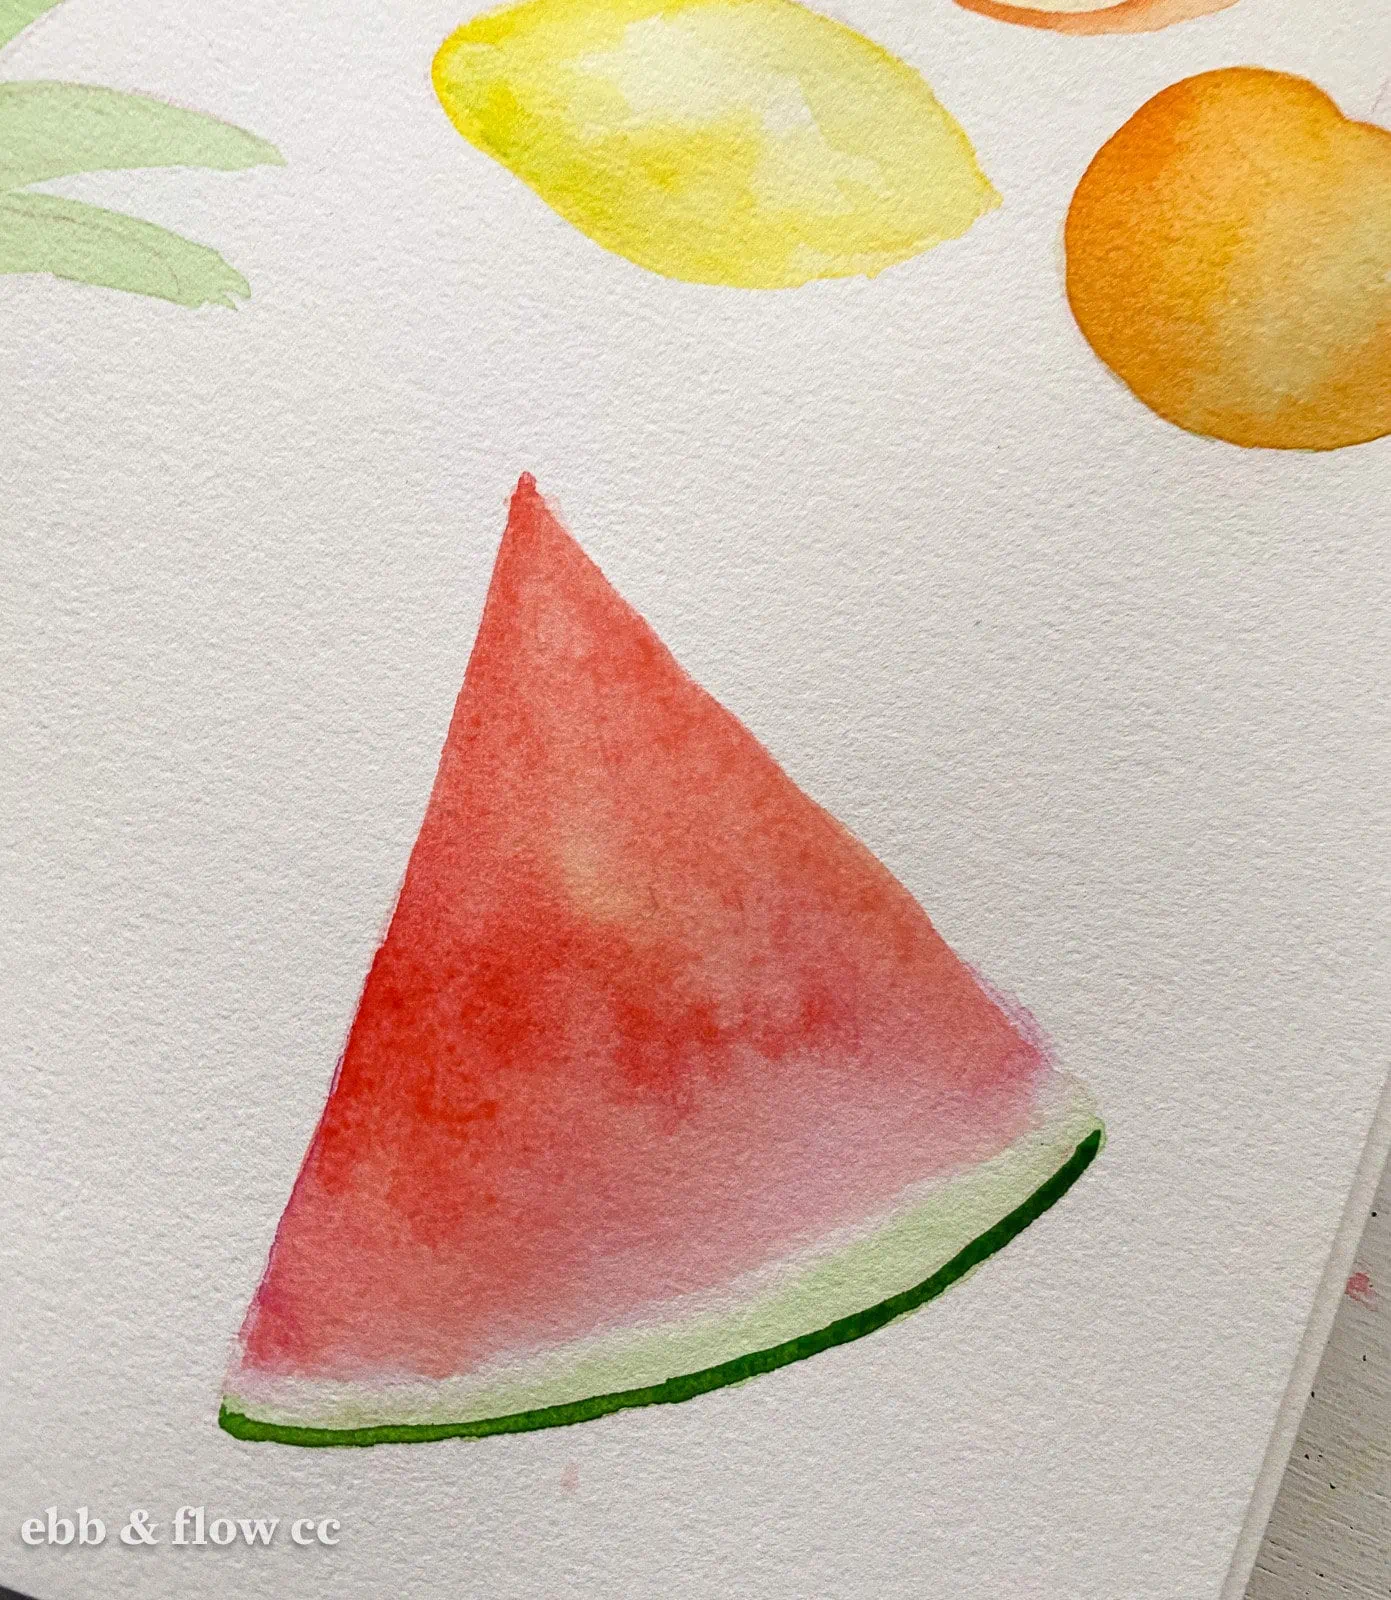 watermelon painting in progress